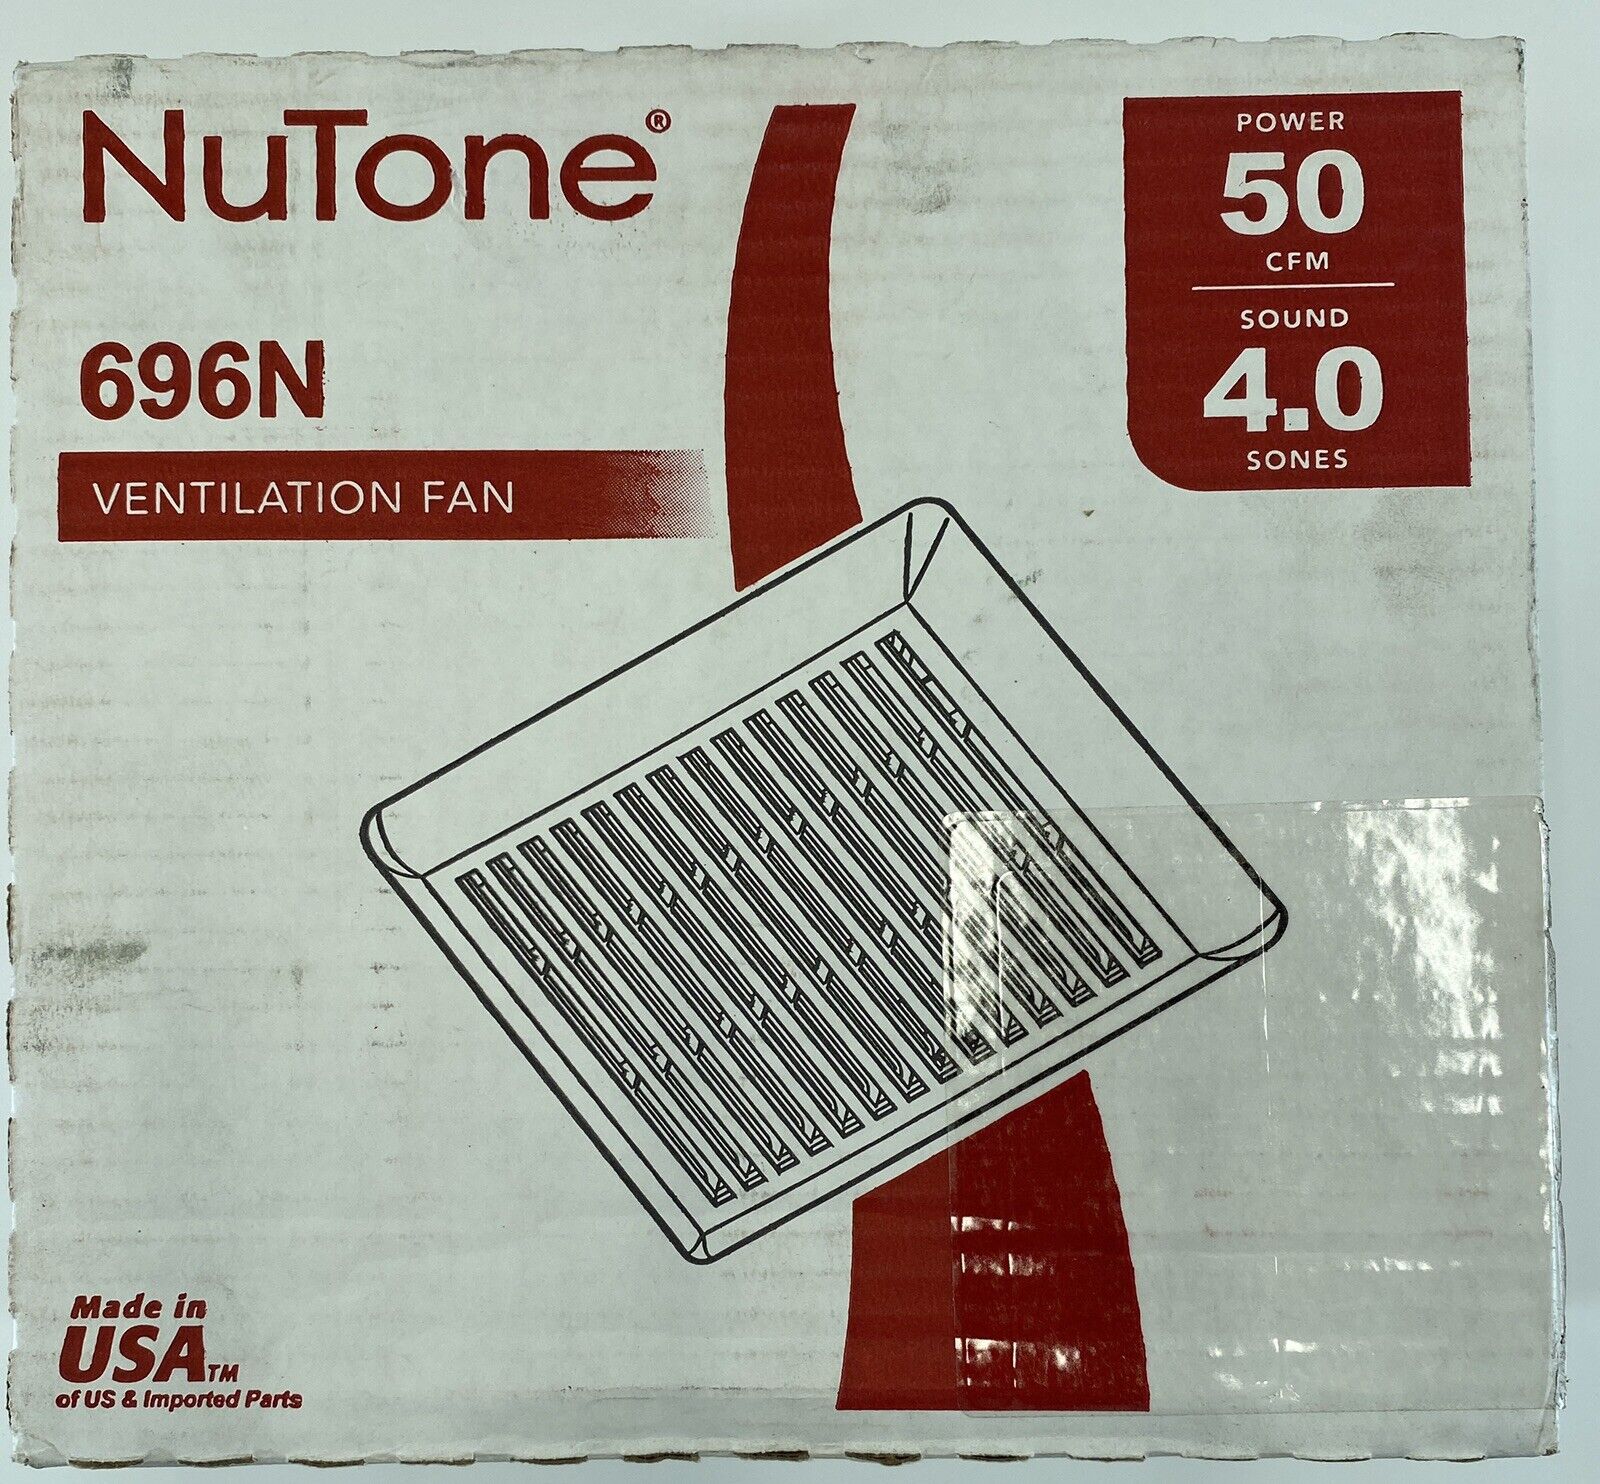 NuTone 50 CFM Exhaust Bath Fan Wall/ Ceiling Mounted Model 696N